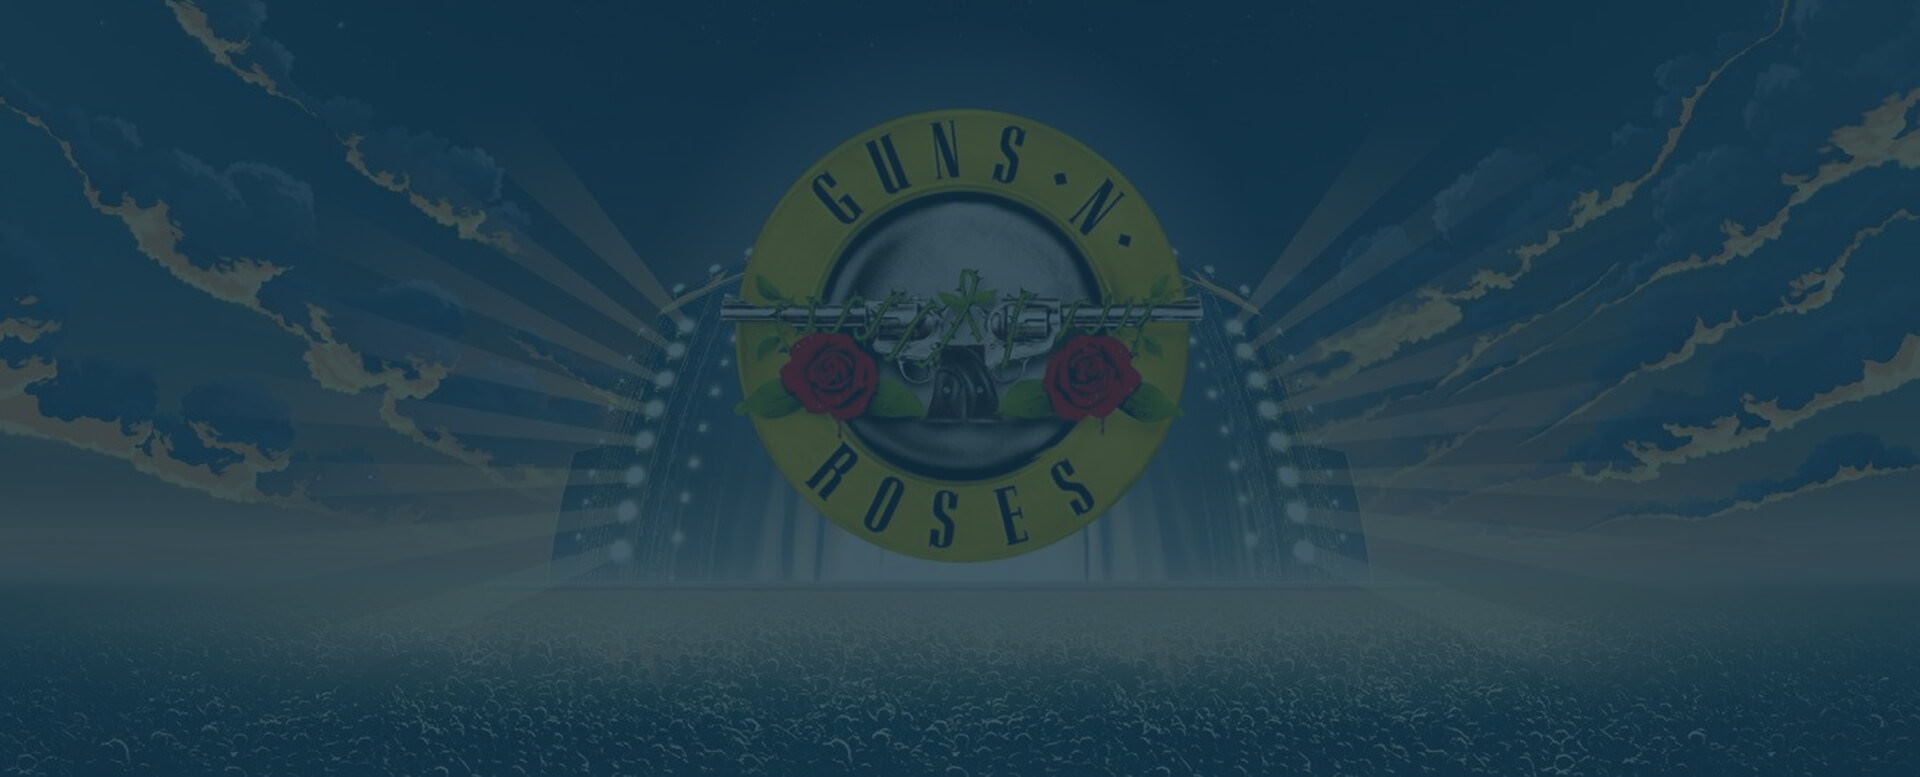 Guns N’ Roses background poster